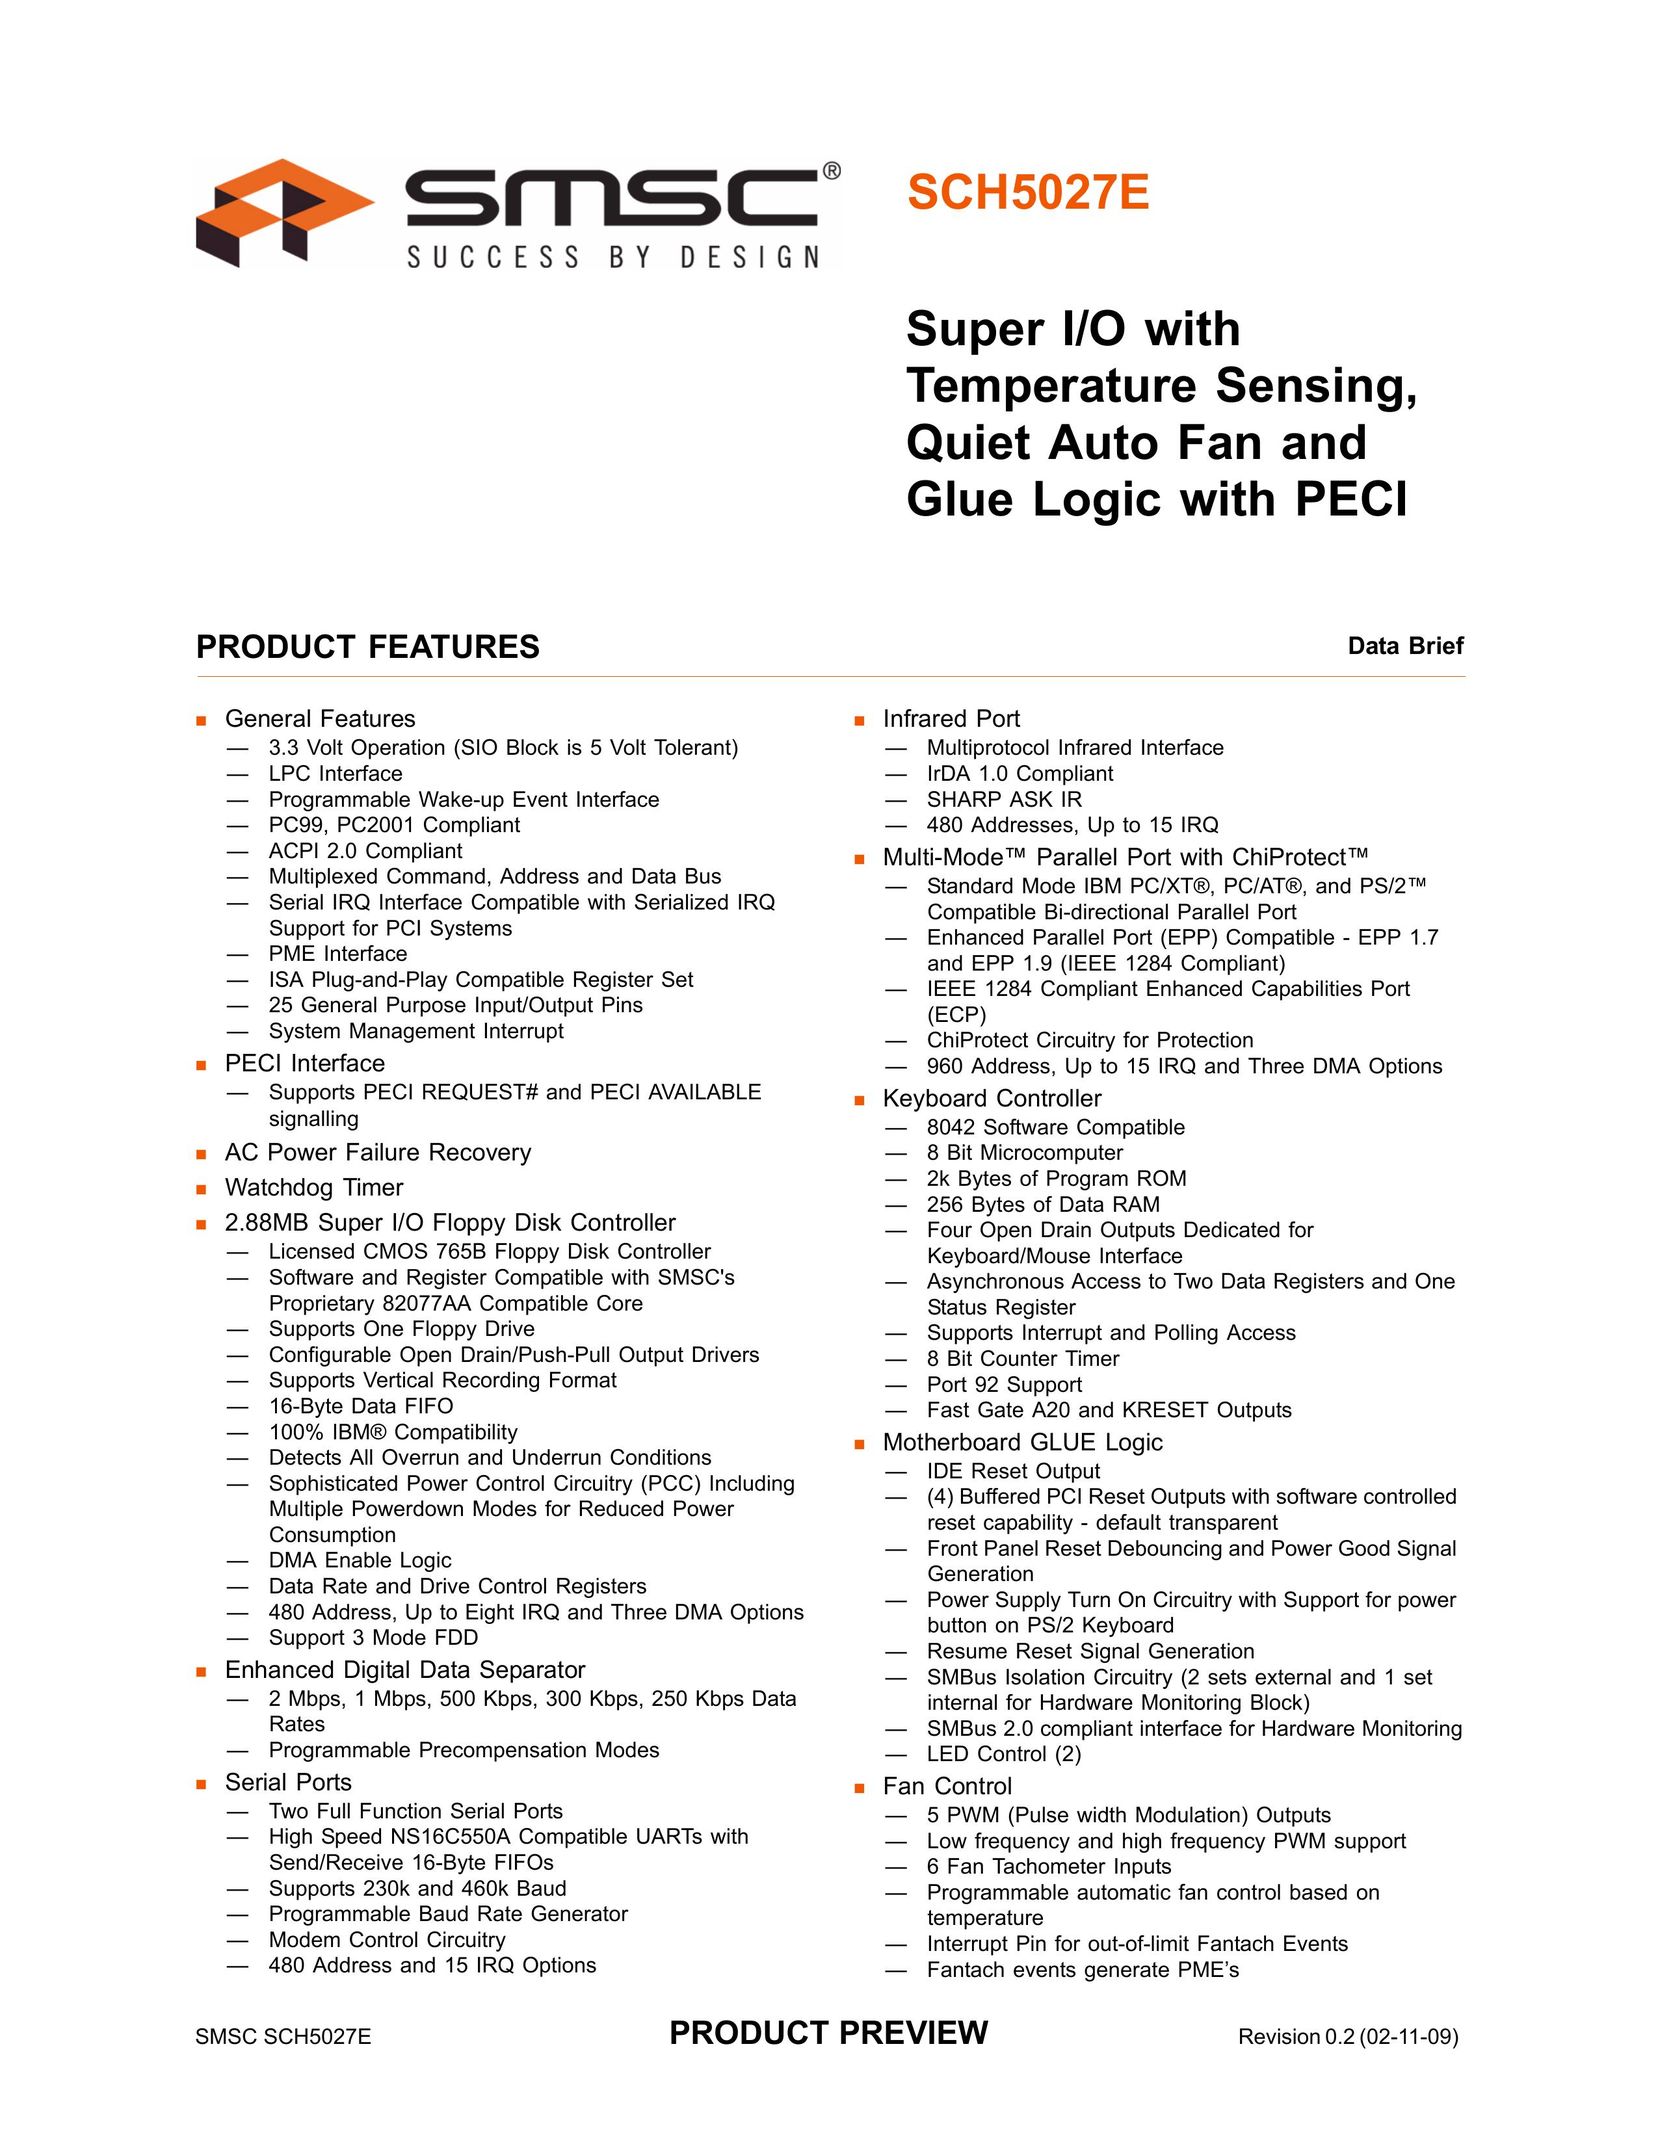 SMSC SCH5027E Computer Hardware User Manual